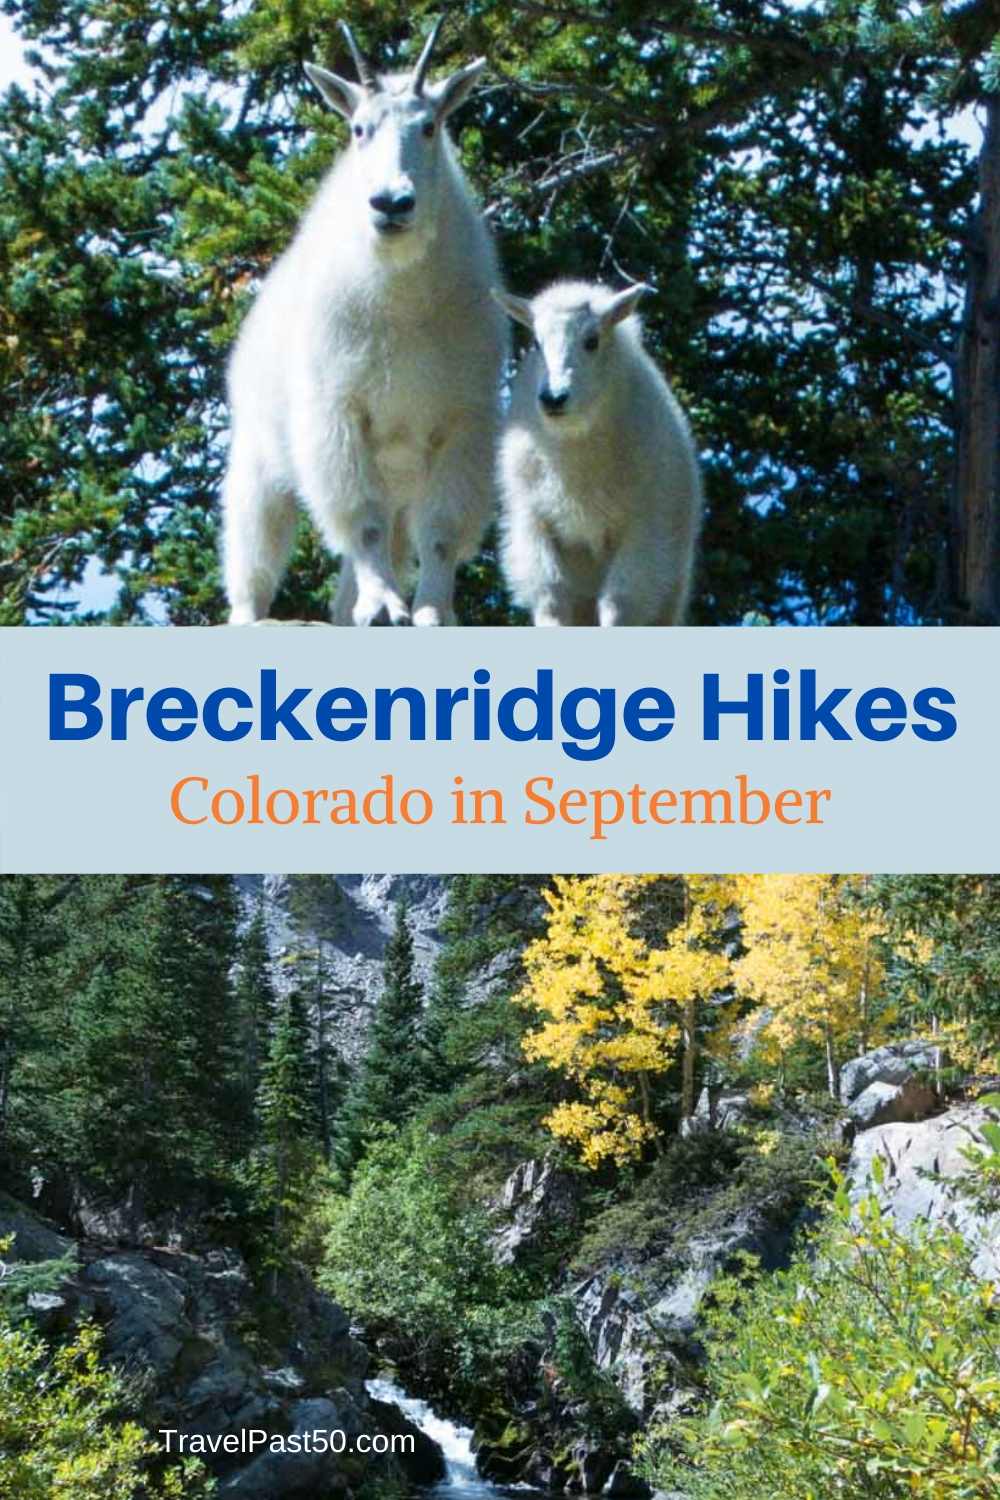 Hike Breckenridge Trails - Travel Past 50